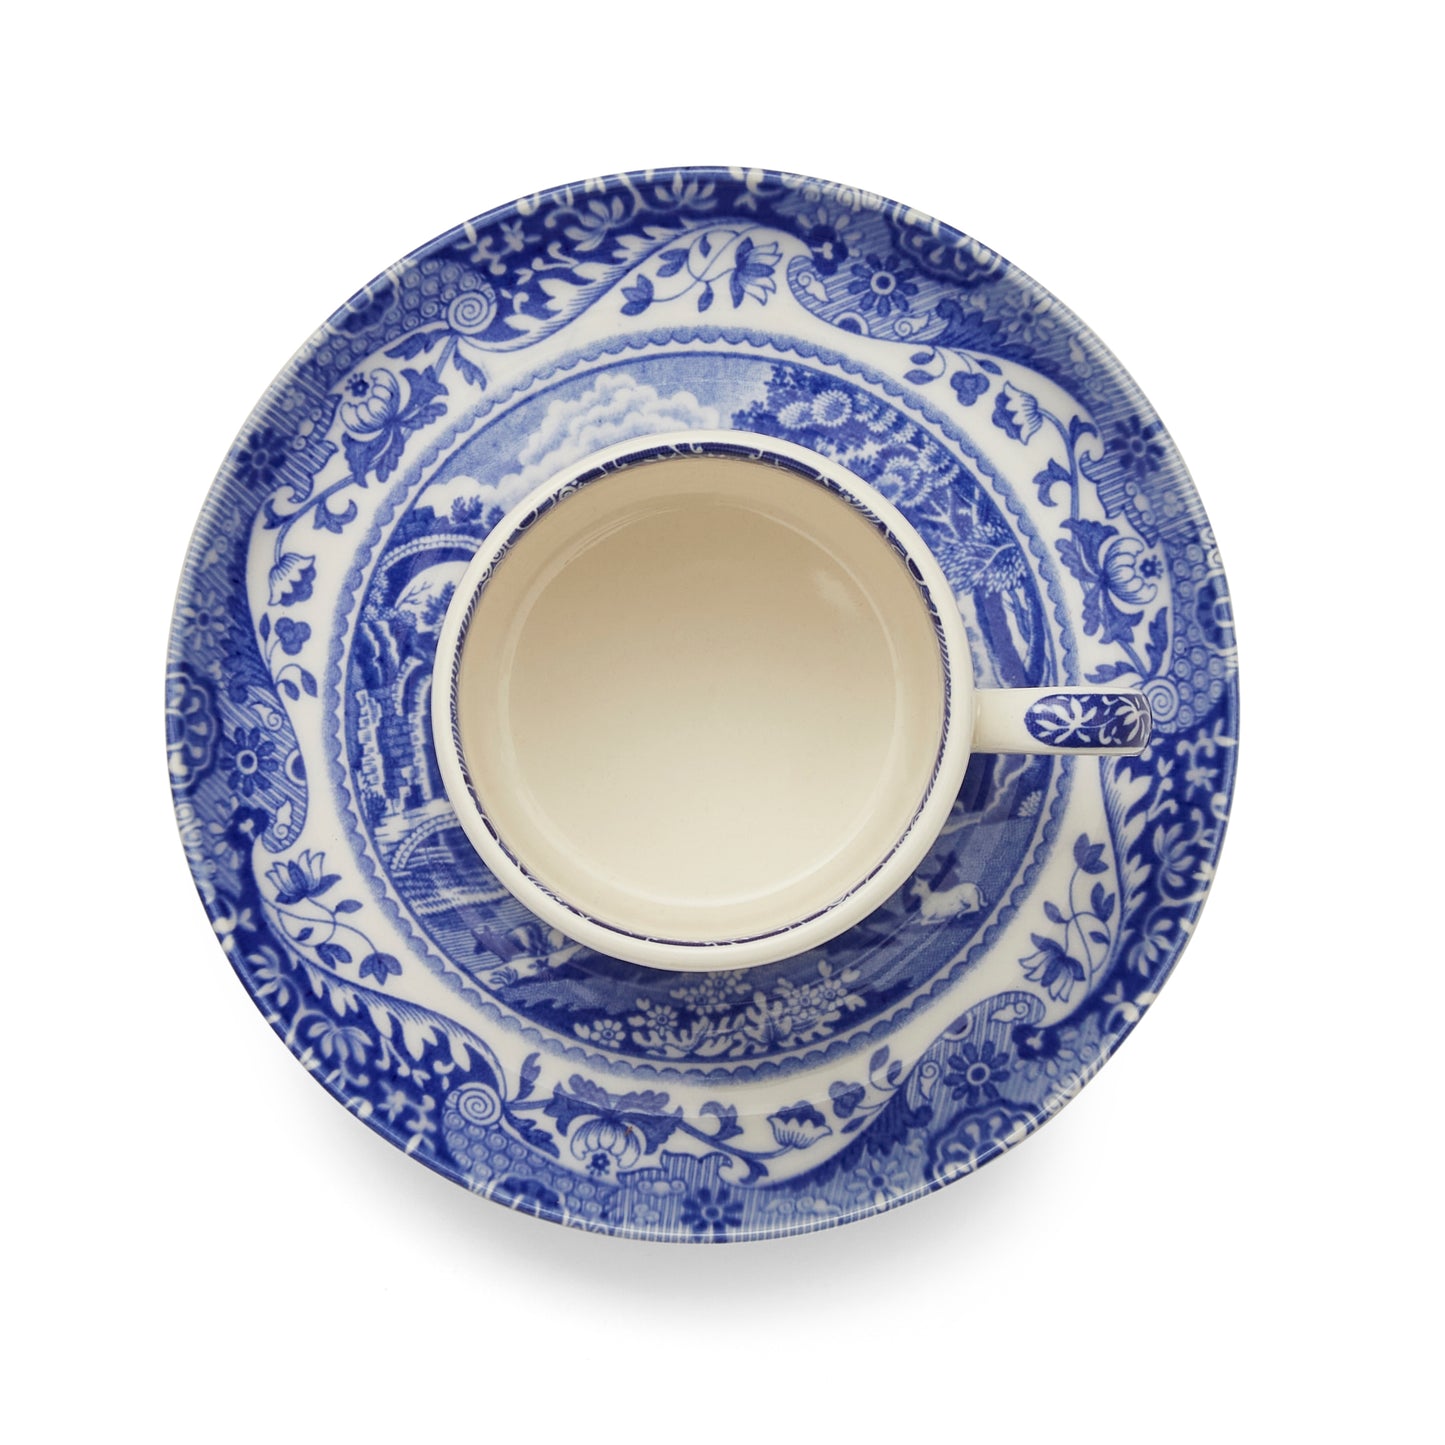 Coffee cup & saucer - Blue Italian set of 2